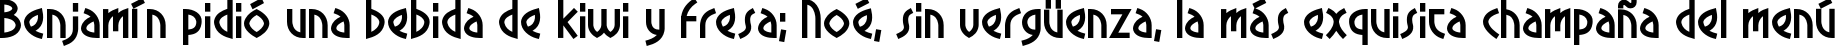 Пример написания шрифтом CrowBeak текста на испанском